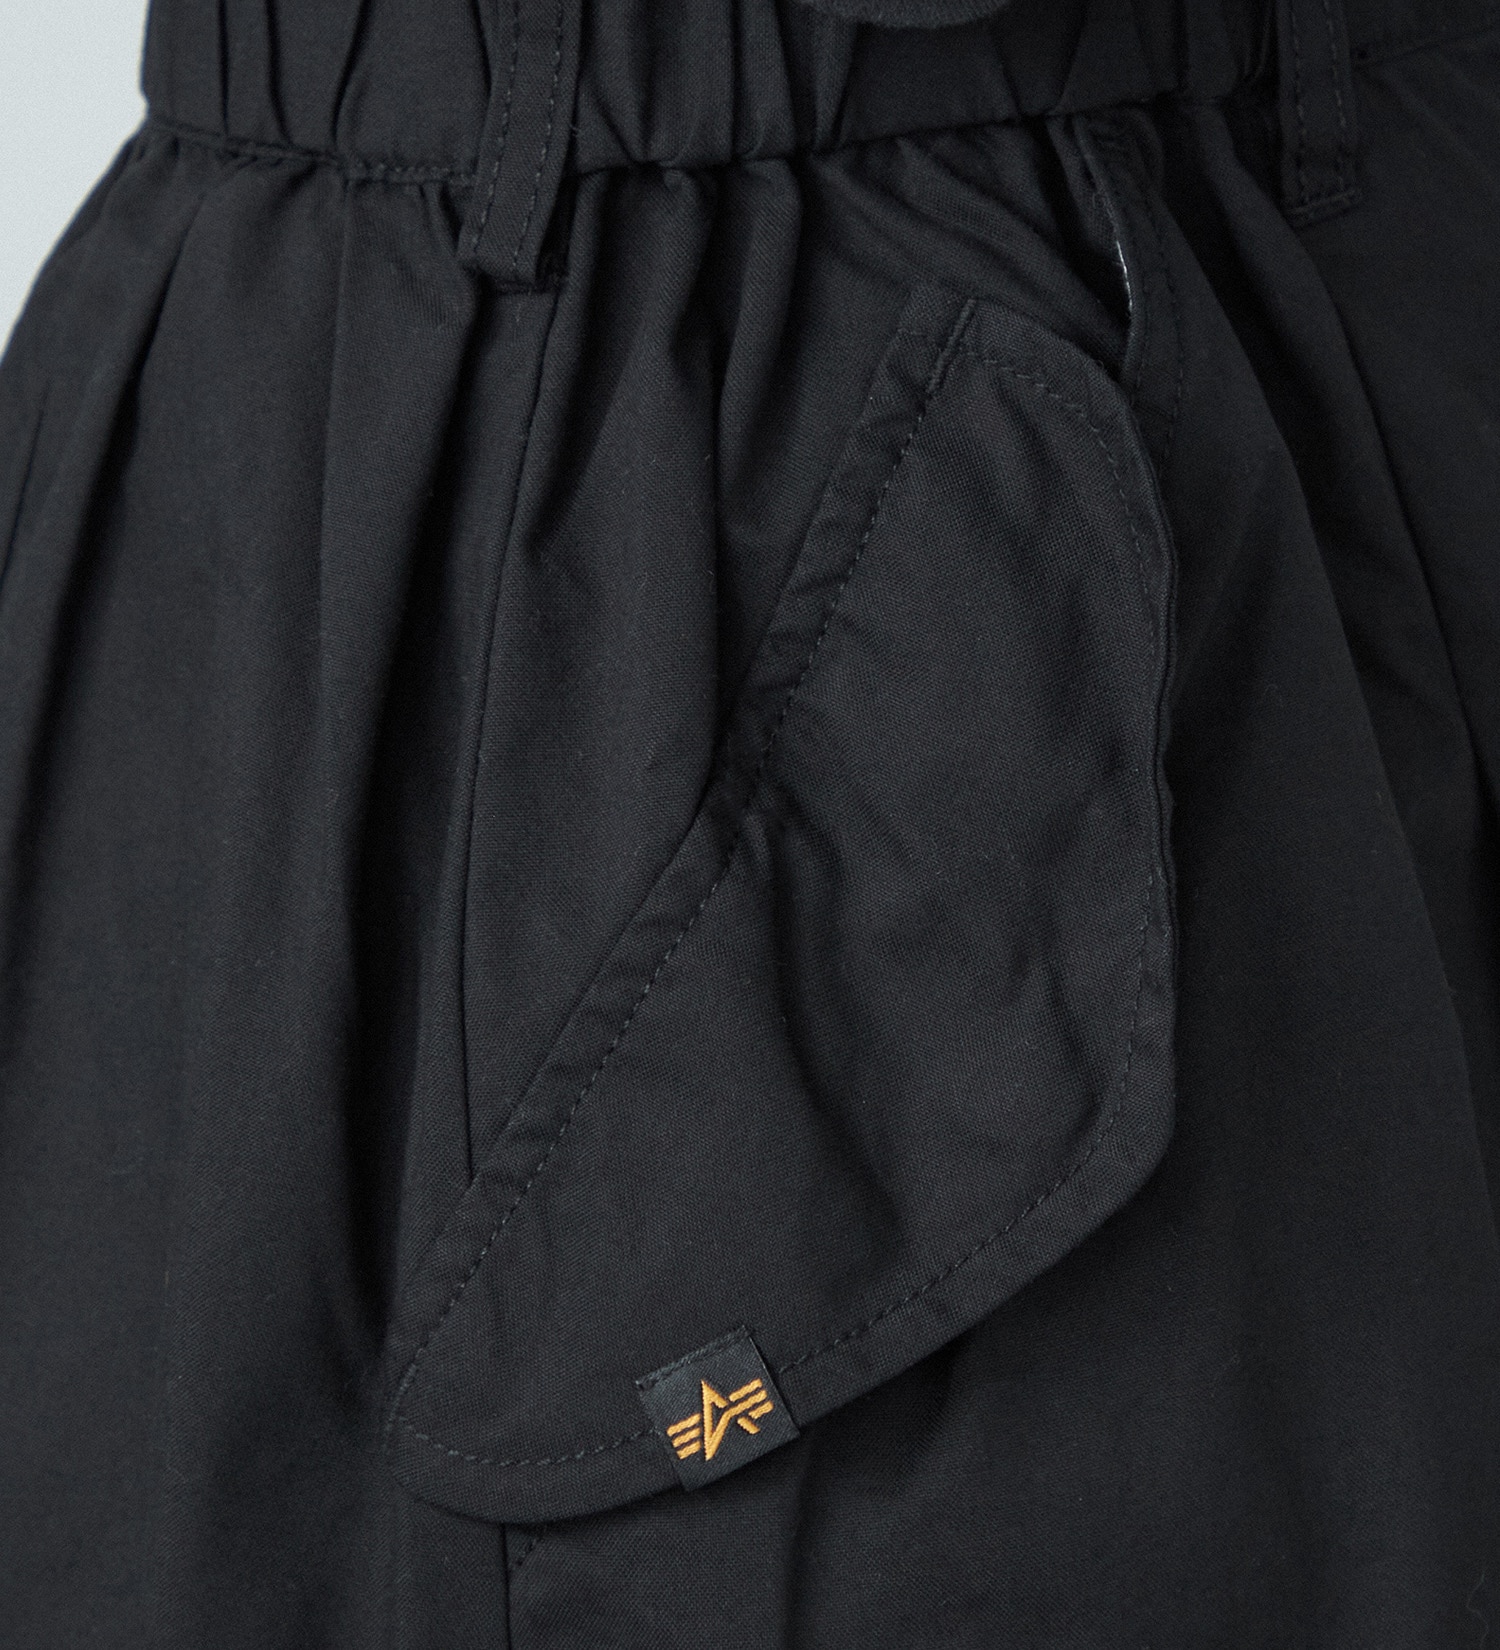 ALPHA(アルファ)の【GW SALE】モッズミリタリースカート|スカート/スカート/レディース|ブラック